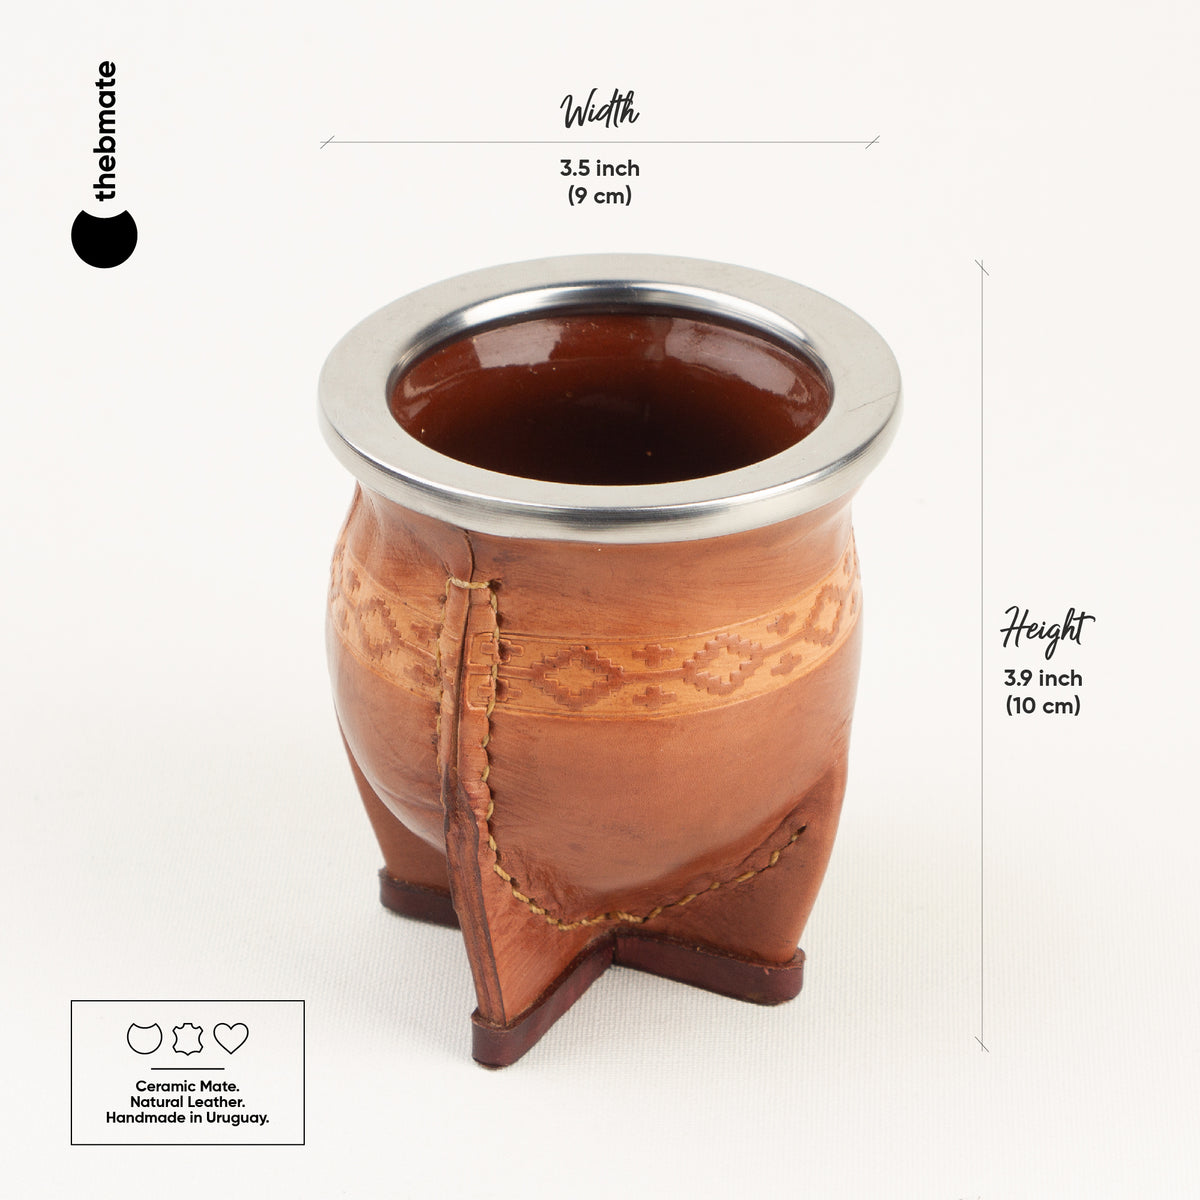 Mate CERAMICA forrado en cuero (mate cup of ceramic with leather)